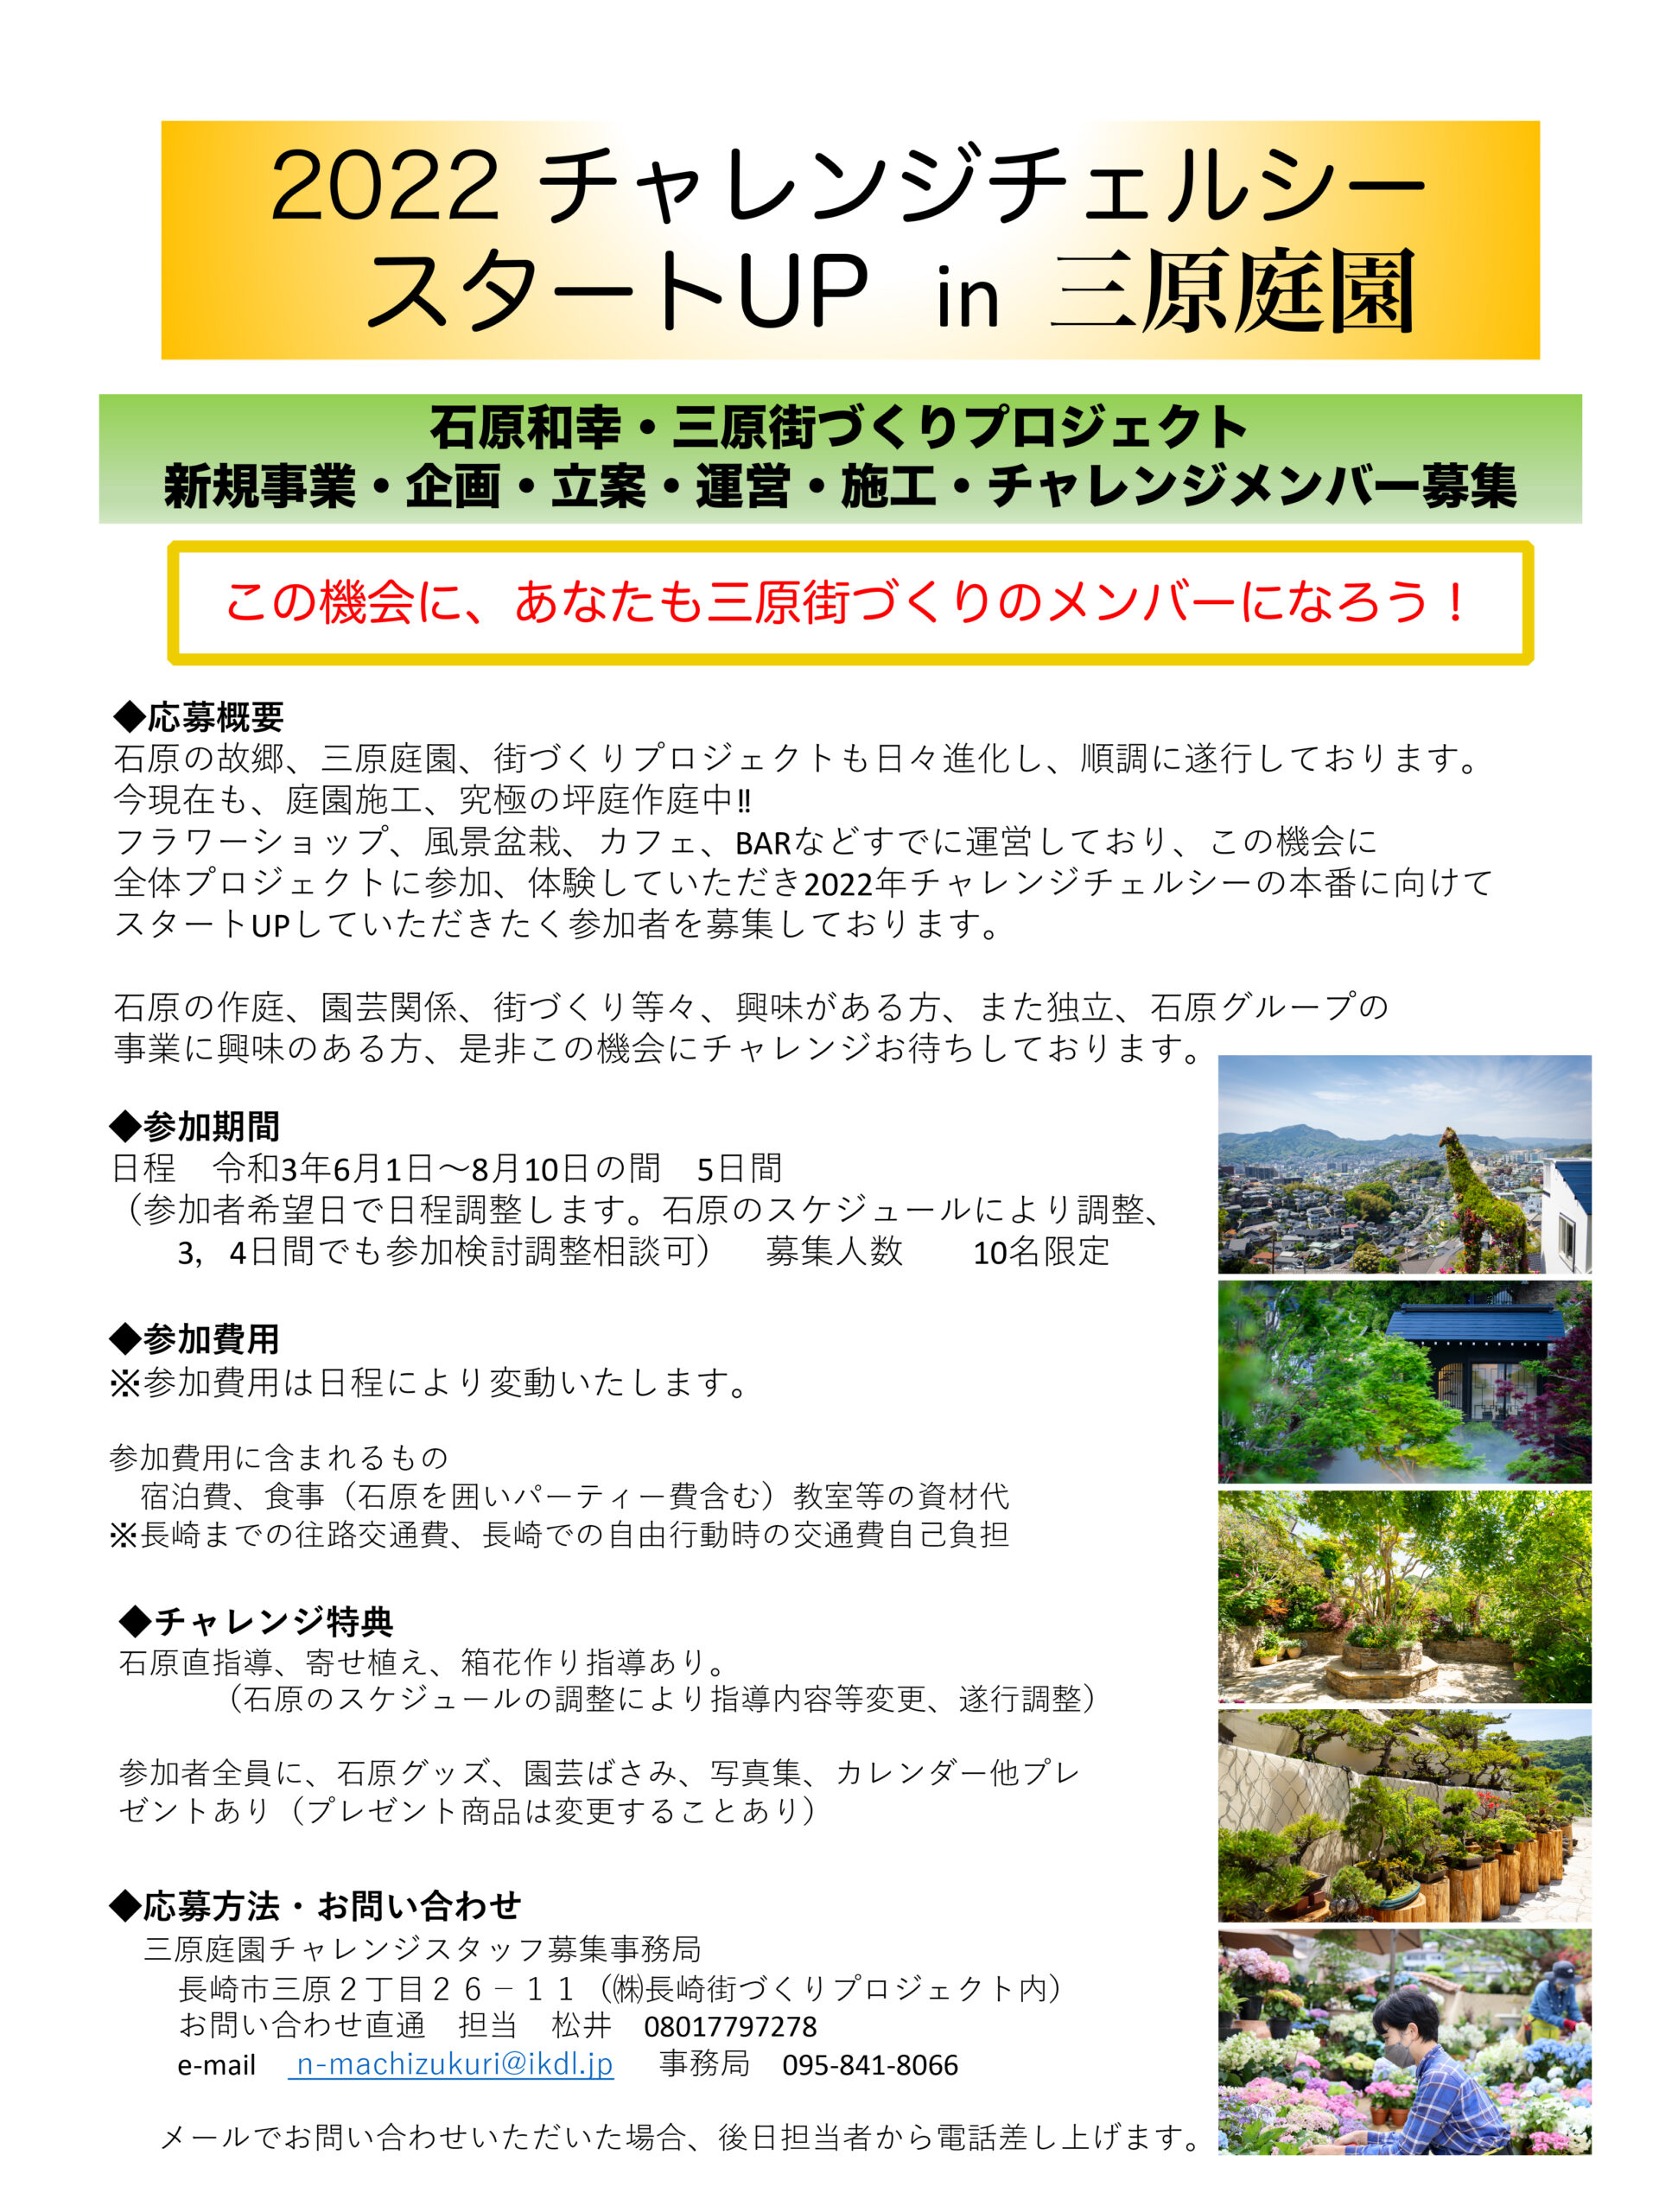 【募集】start up in 三原庭園